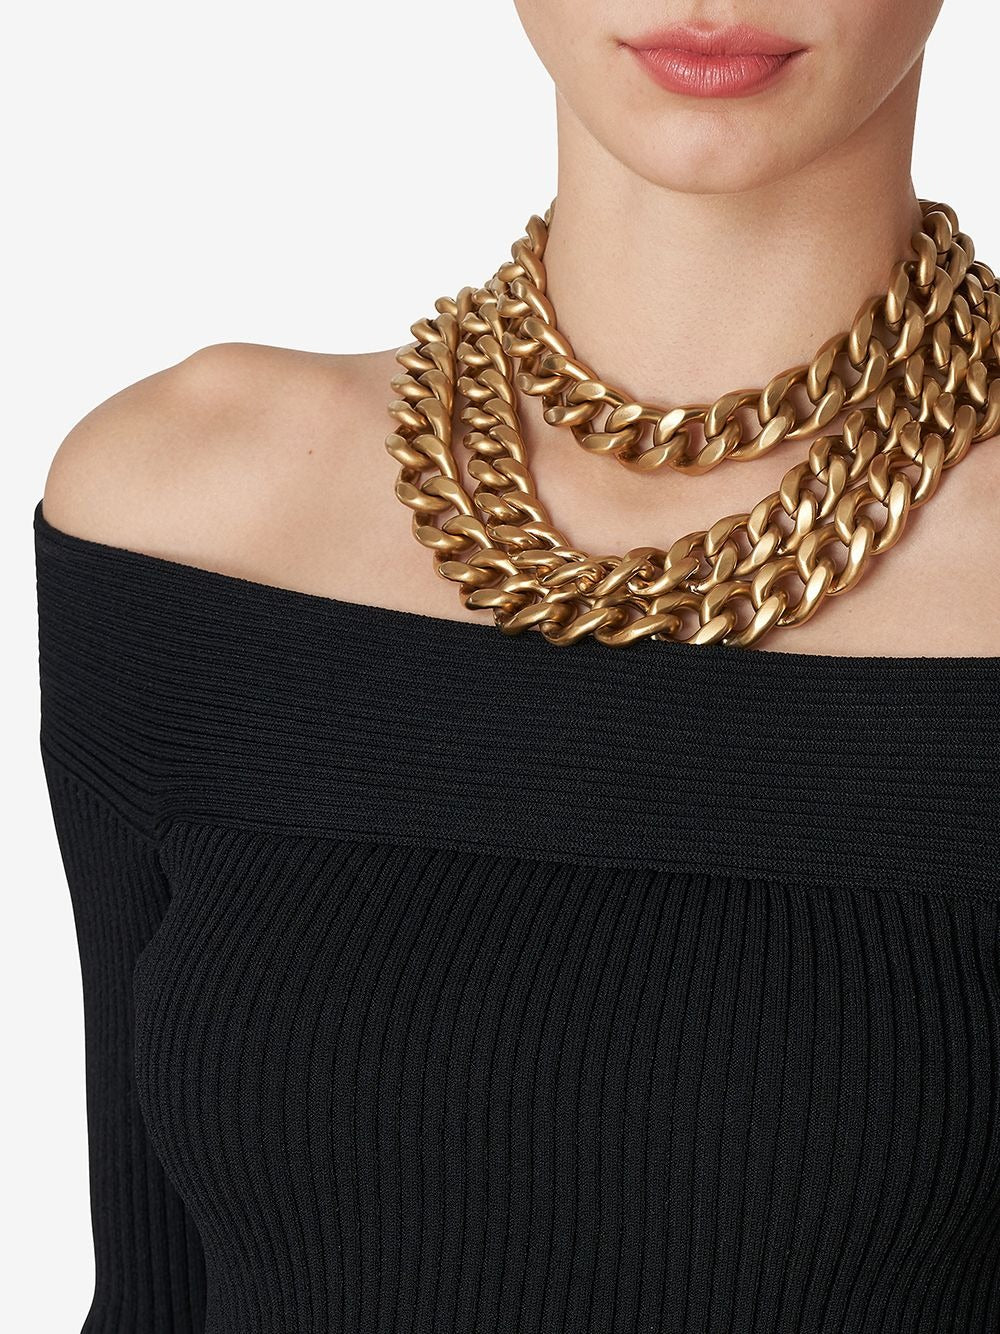 Carolina Herrera Gold Multi Chain Necklace